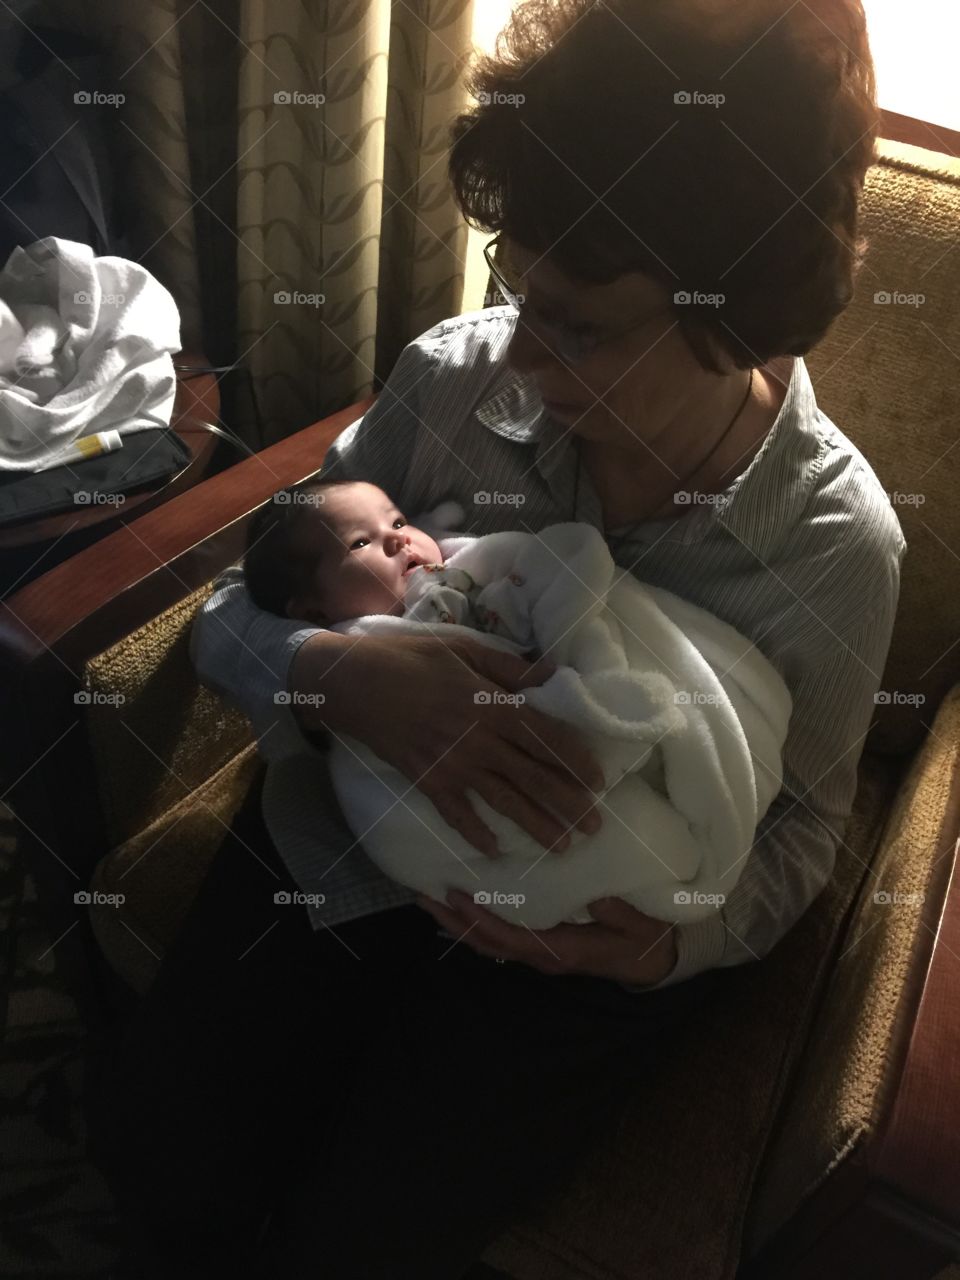 Grandma meets newborn. Baby meets grandma